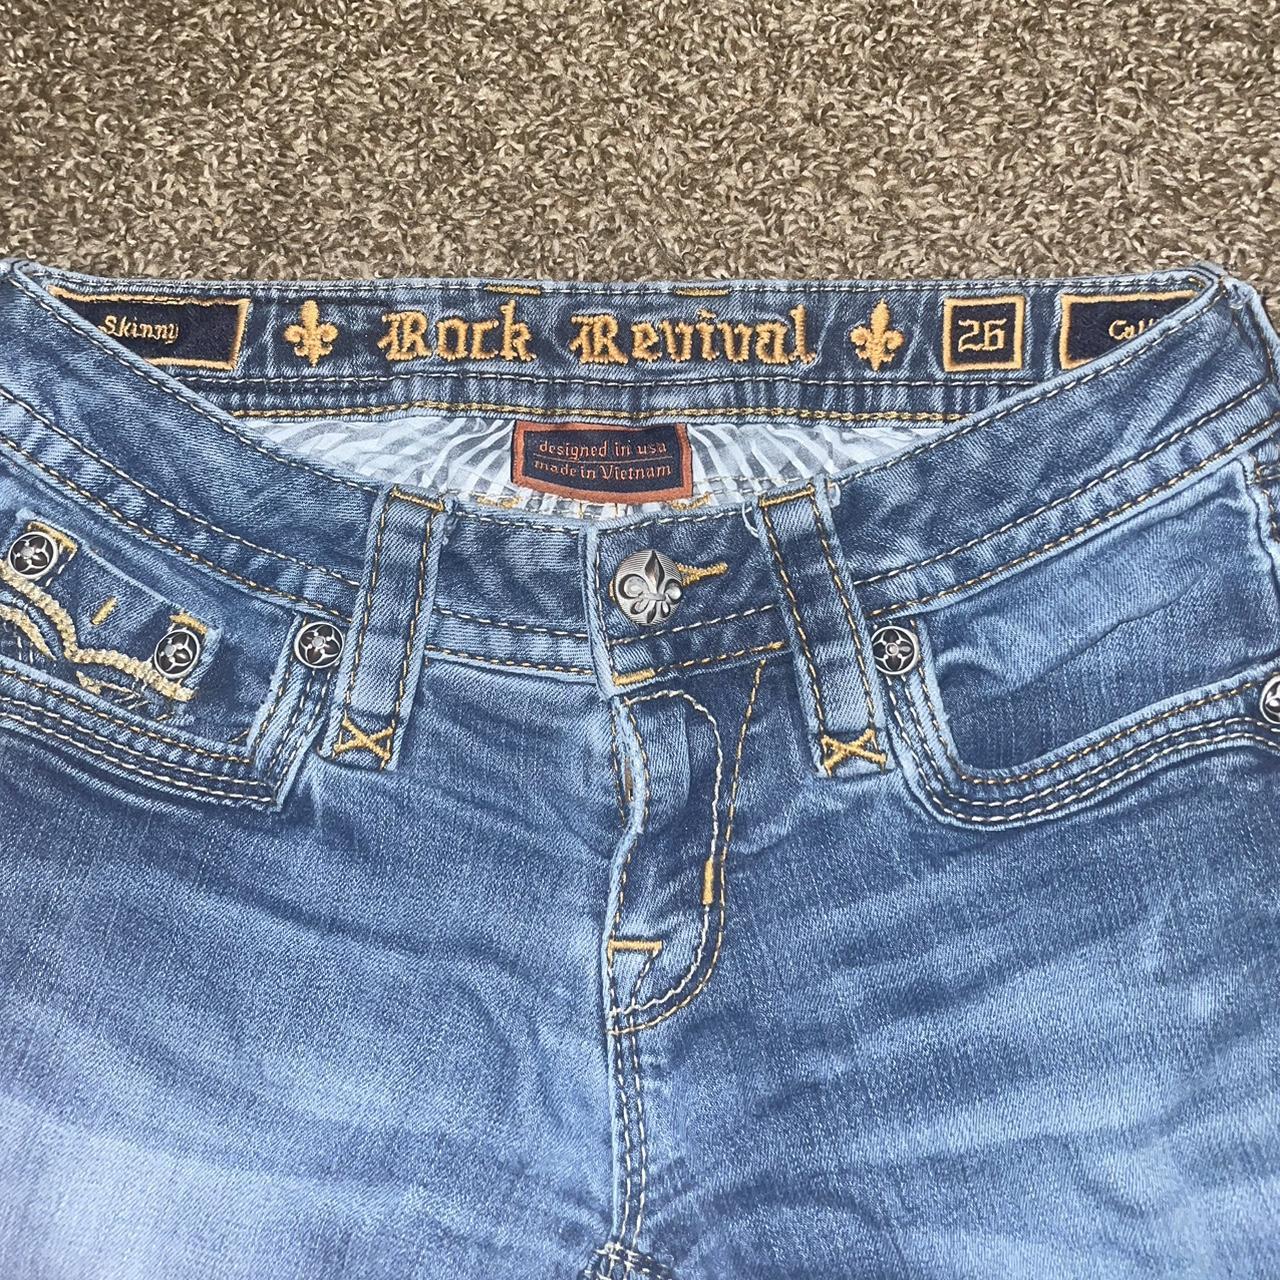 Skinny rock revival jeans Size : 26 Has a missing... - Depop